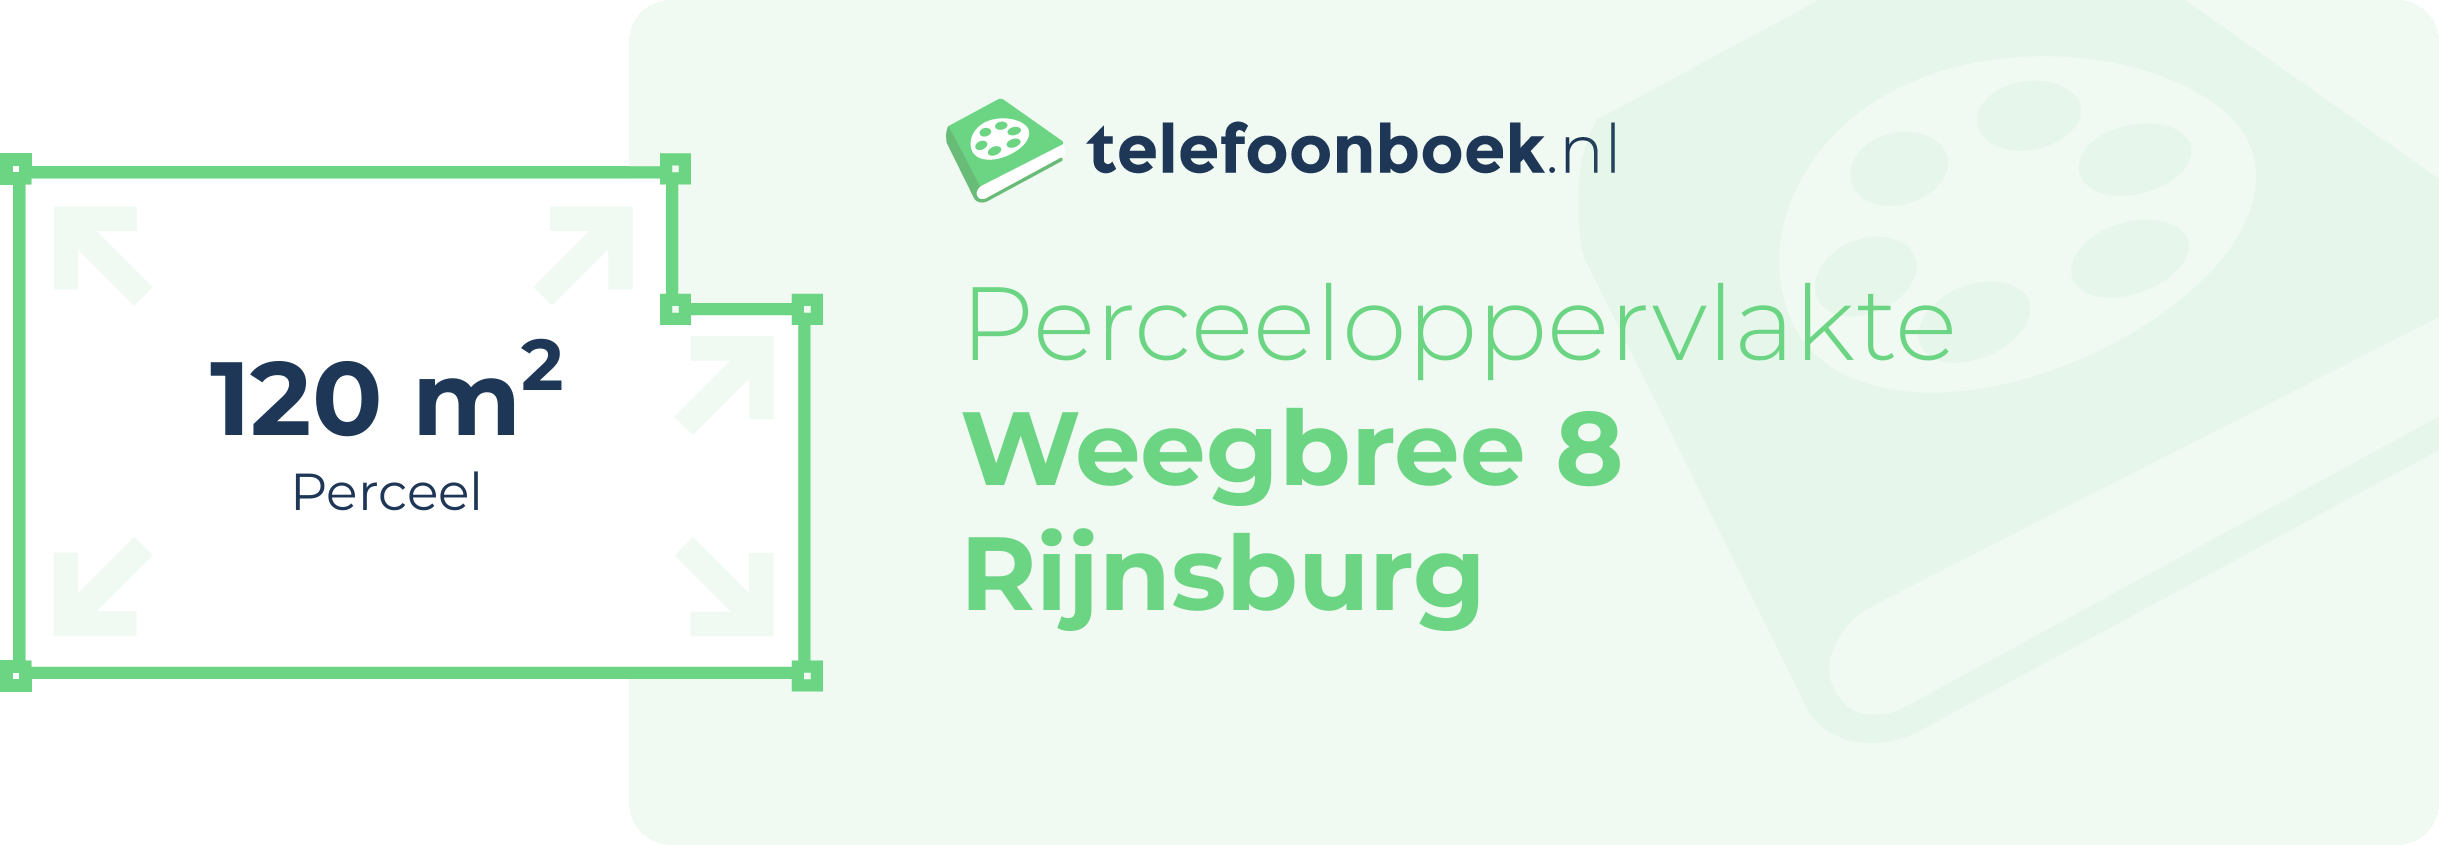 Perceeloppervlakte Weegbree 8 Rijnsburg